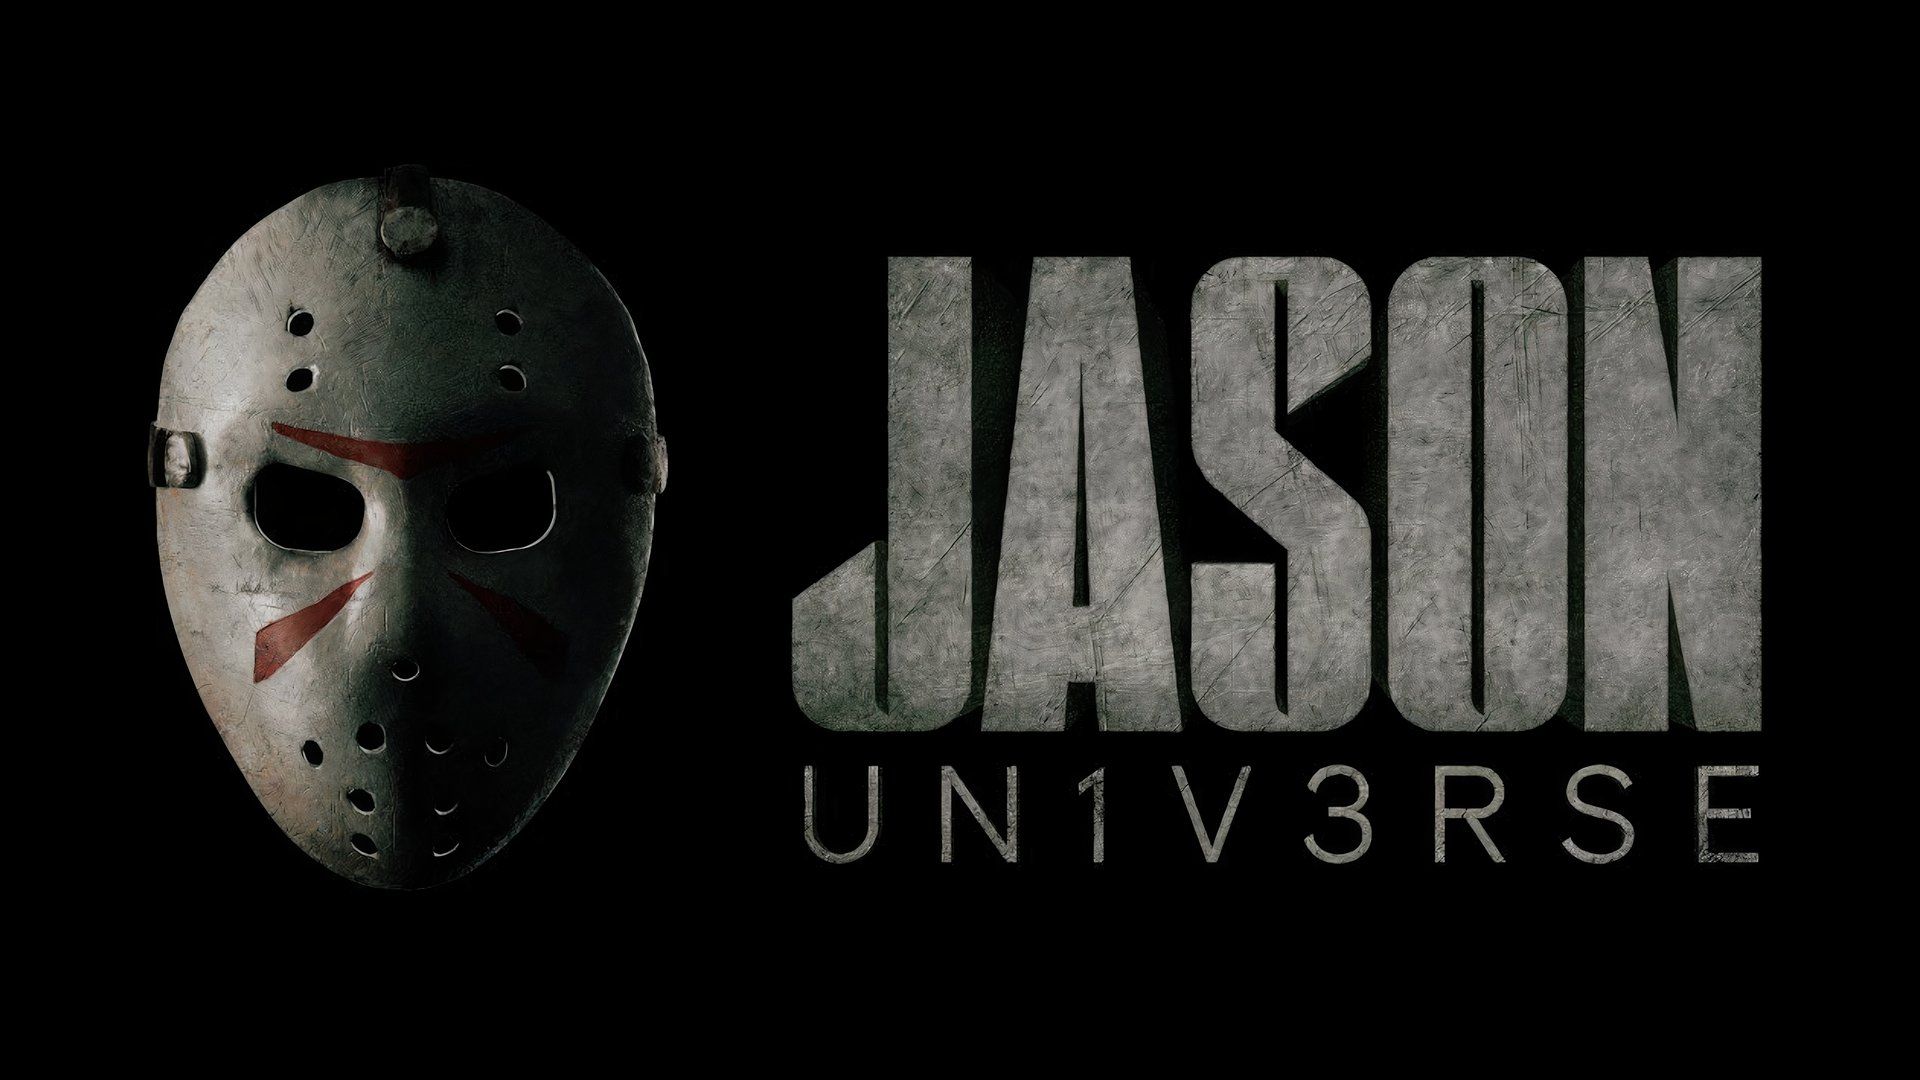 Jason Universe logo from Horror, Inc.